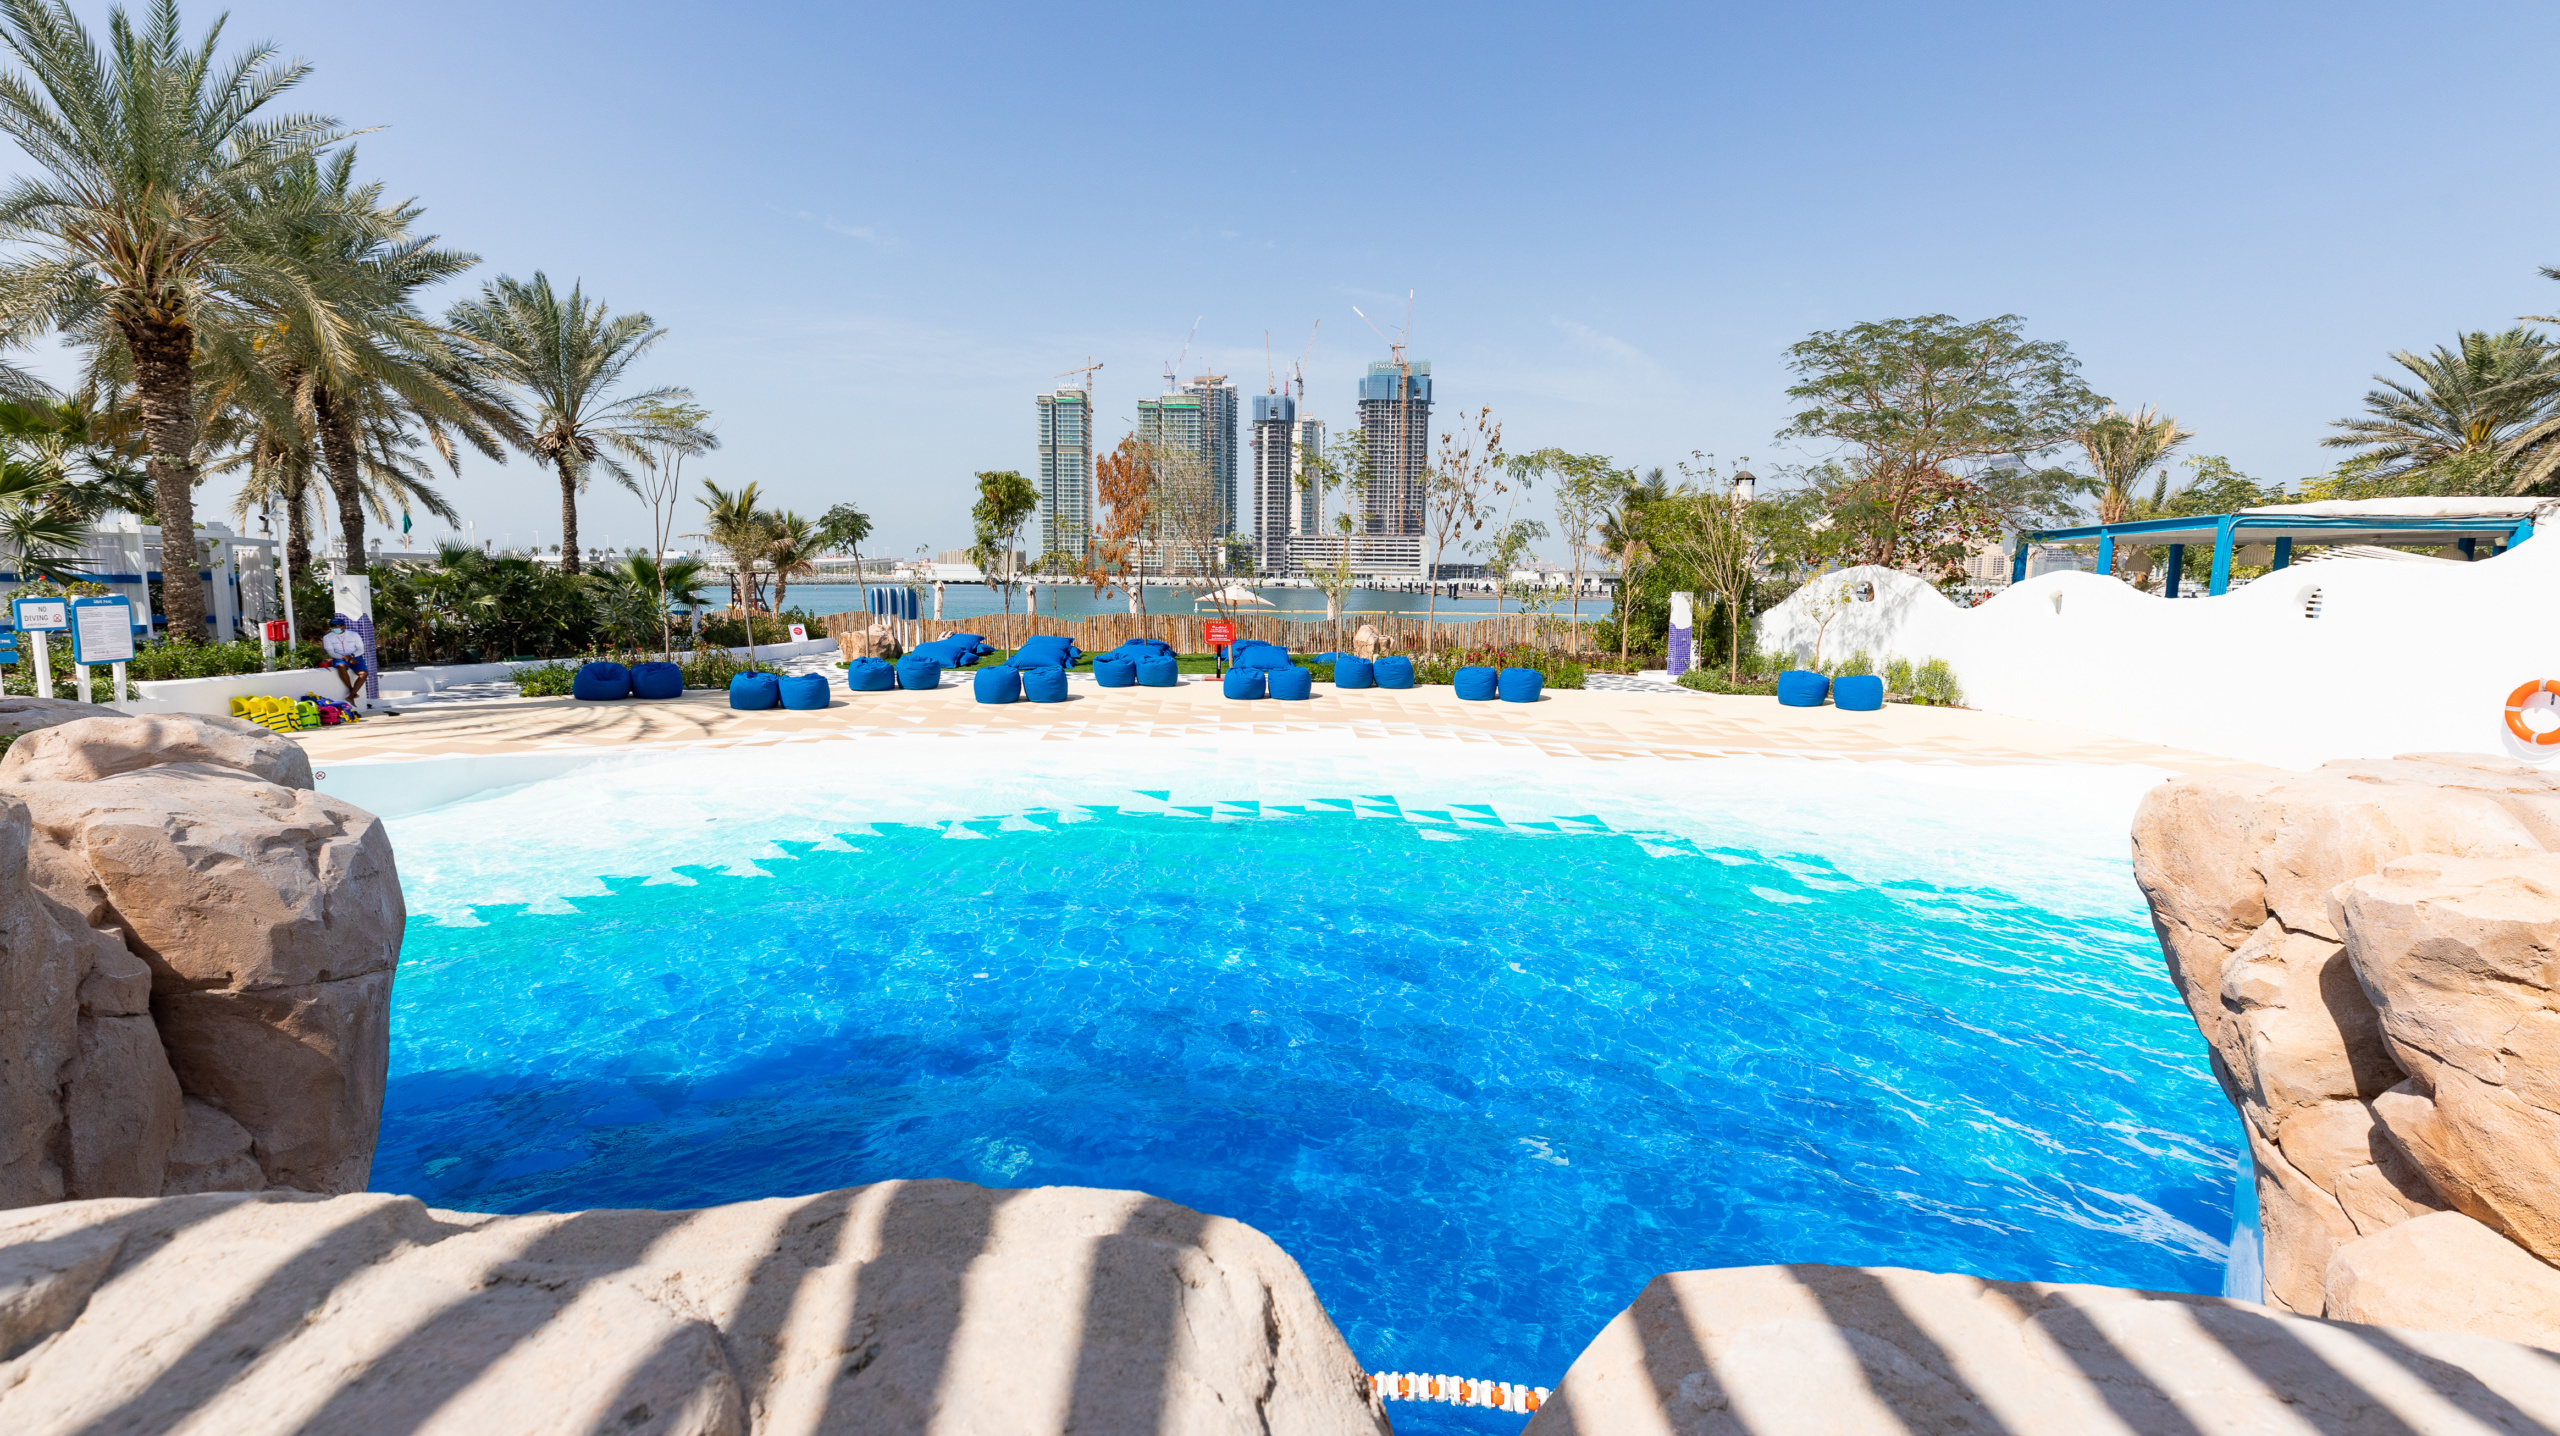 Image Children’s Wave Pool and Life Floor, Jungle Bay Waterpark, Dubai, UAE